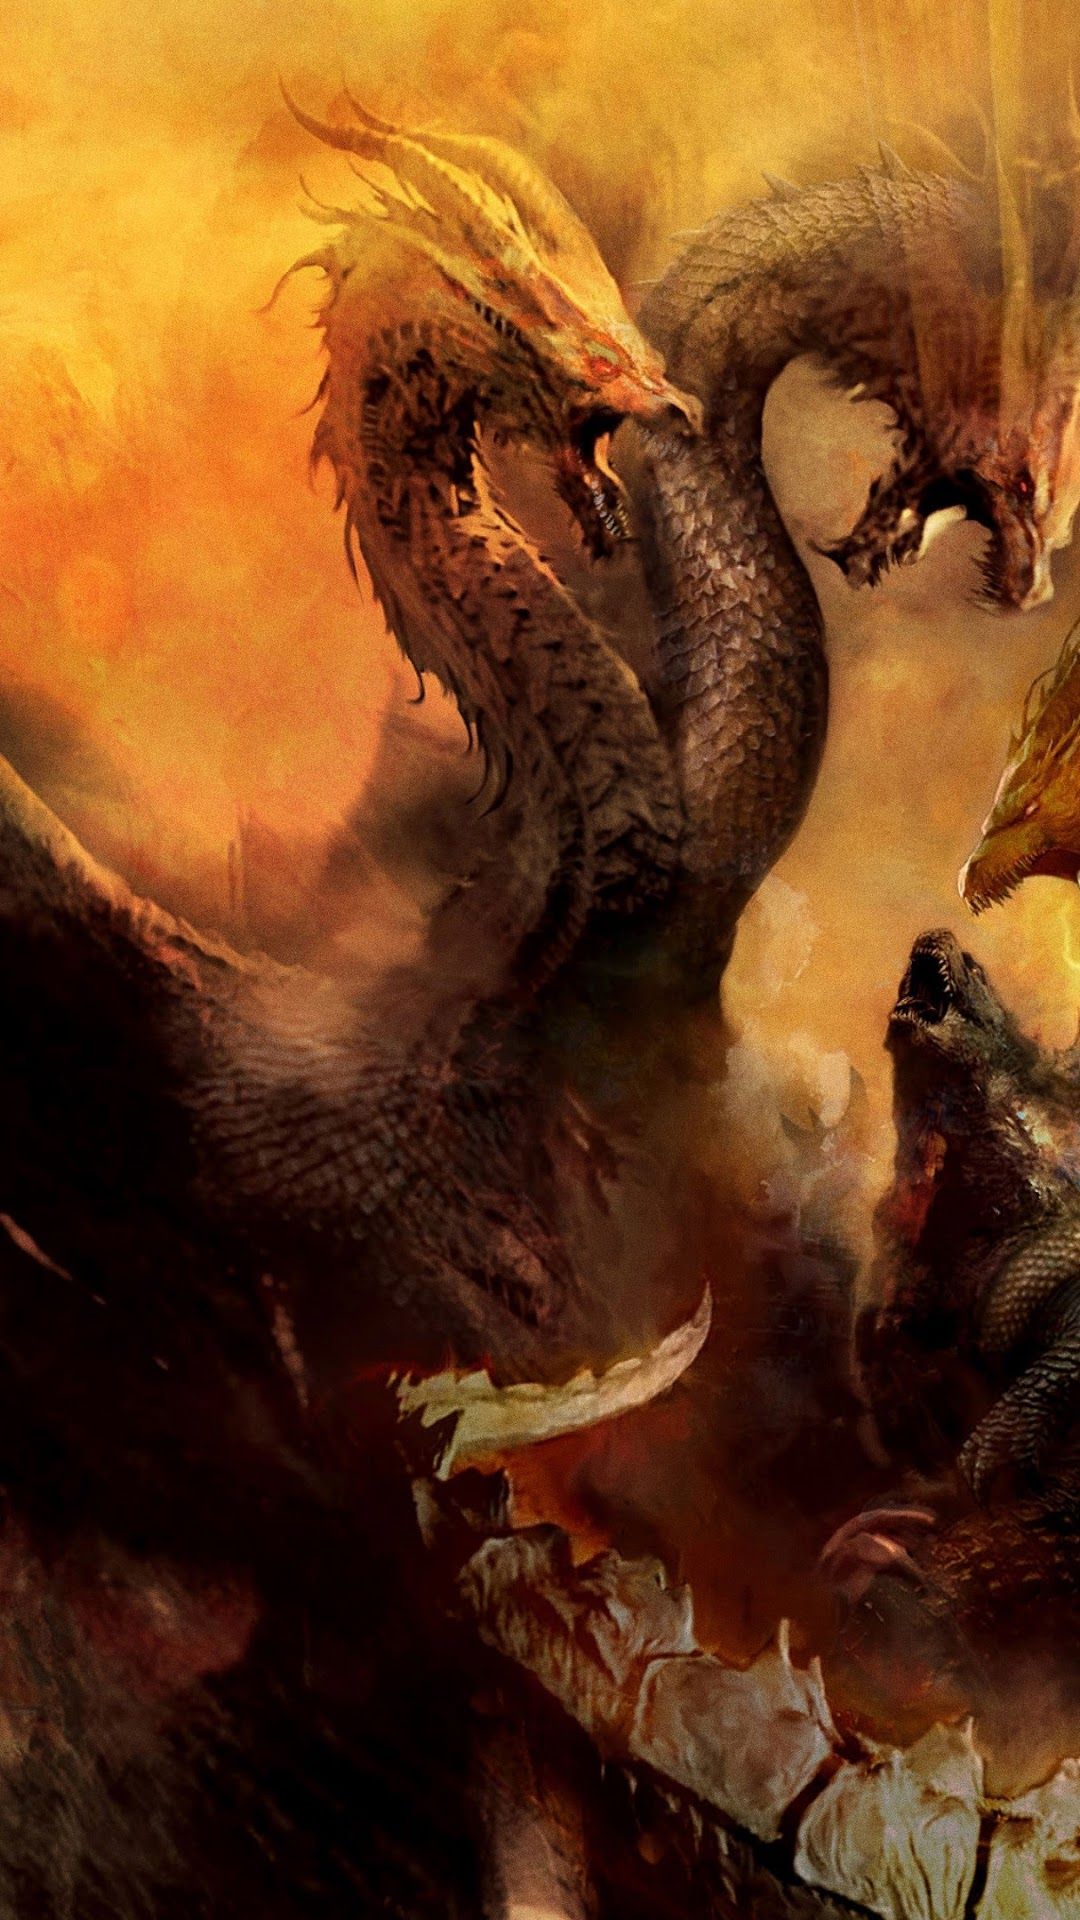 King Ghidorah In Godzilla King Of The Monsters 4K 8K Wallpapers